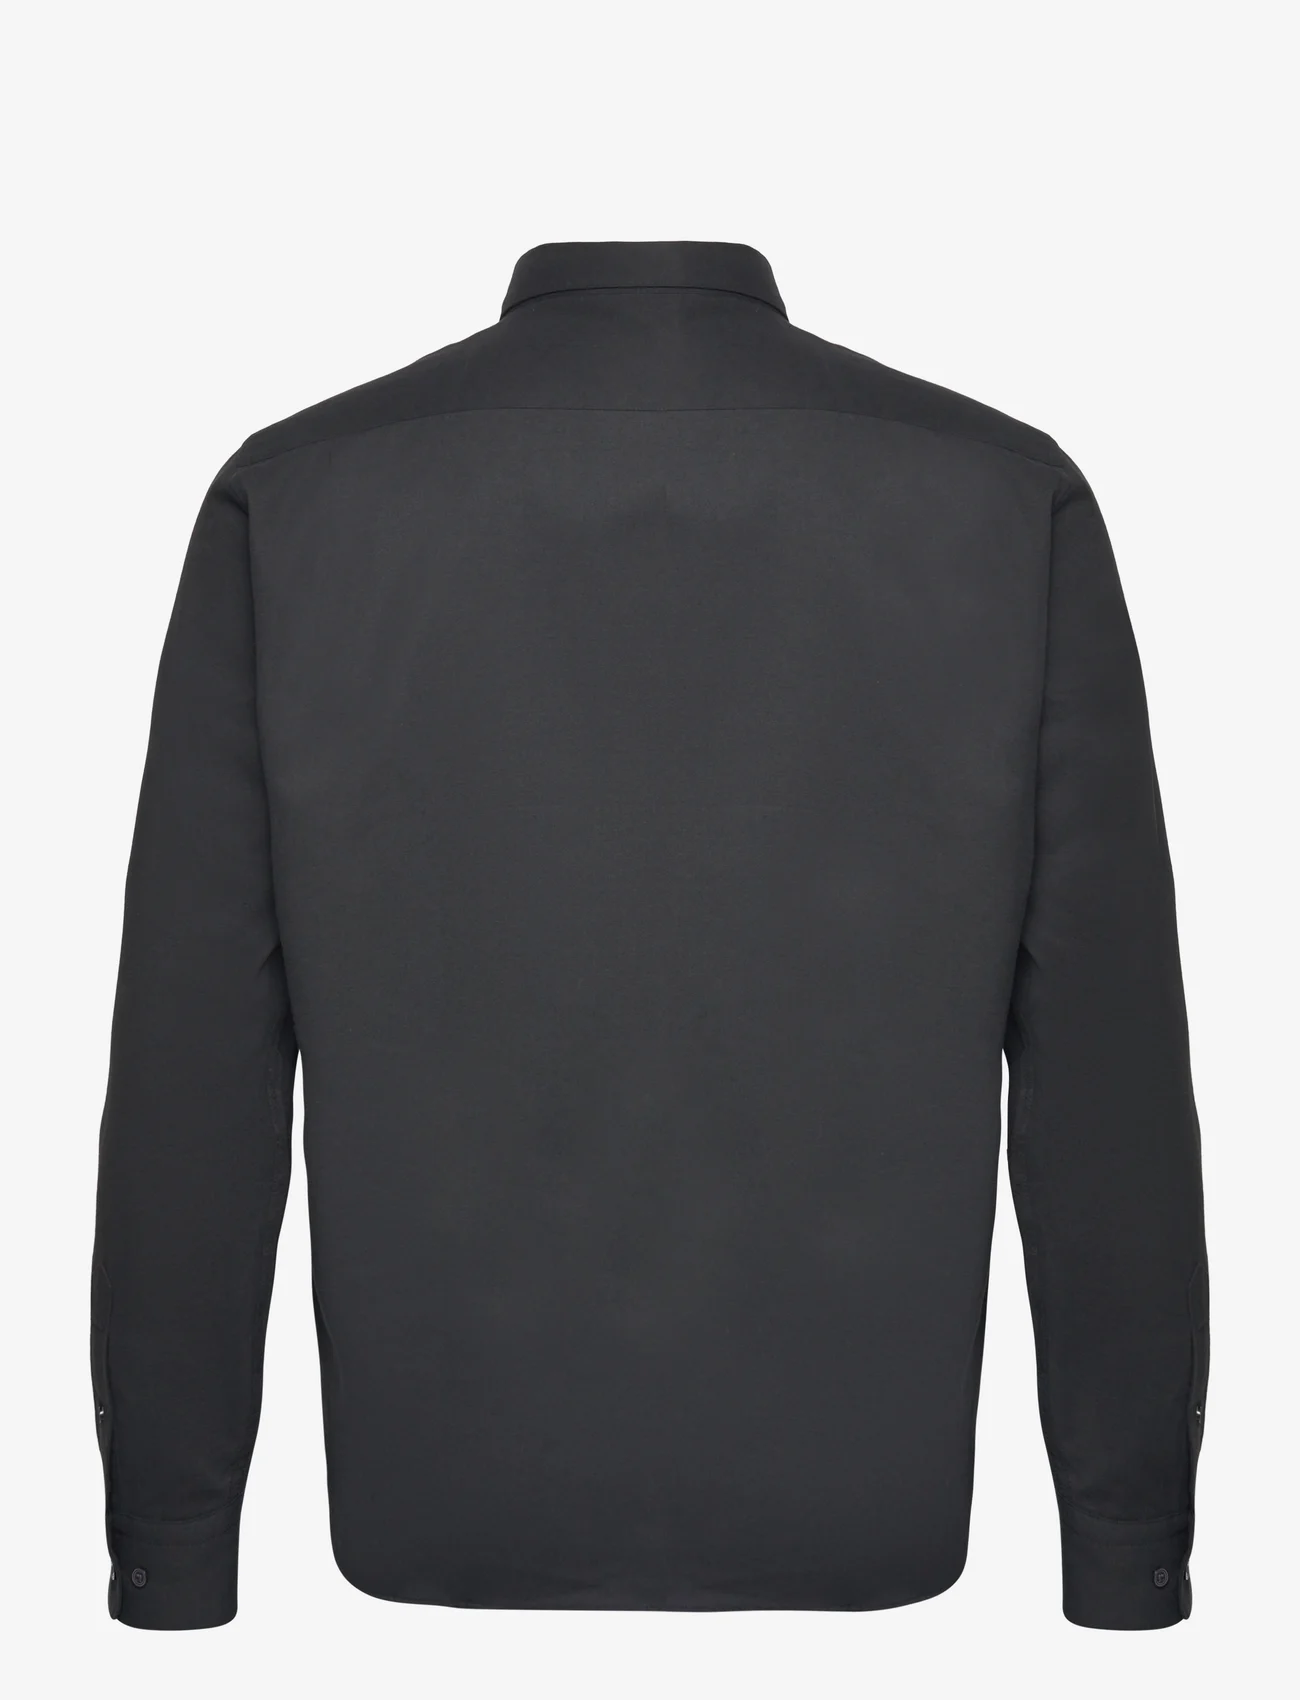 Mads Nørgaard - Flamel Sune Shirt - basic shirts - black - 1